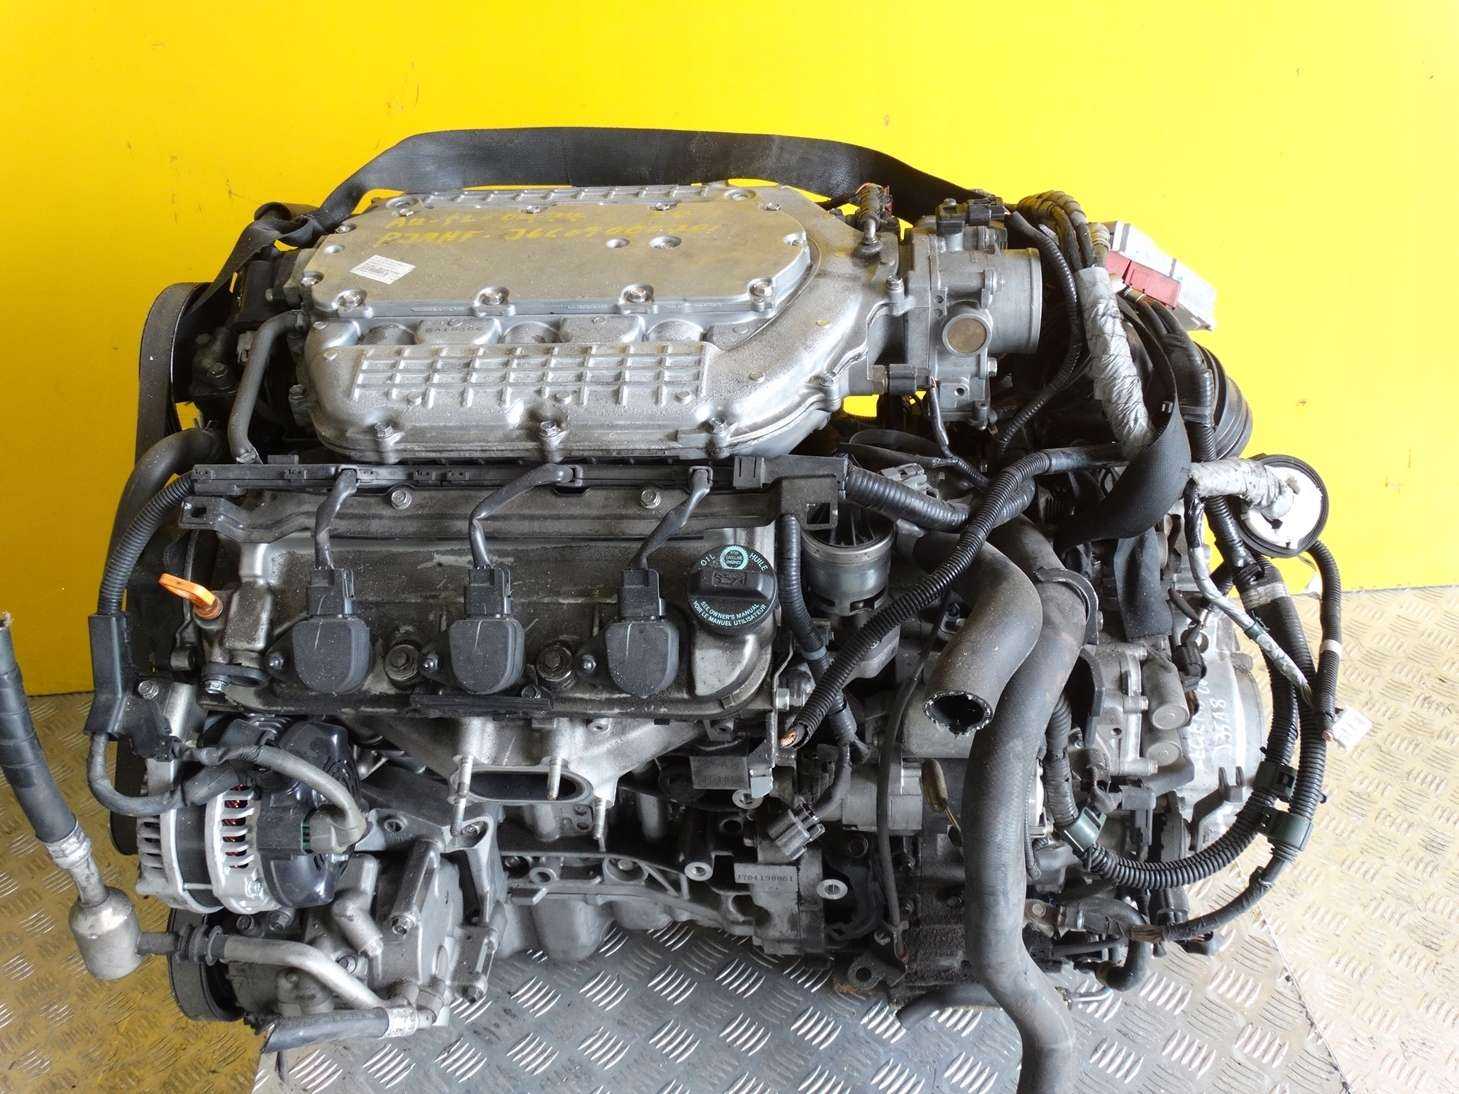 Купить мотор 3 лс. Двигатель j35a4 Honda 3.5. Honda j35a8 Legend. Мотор Хонда легенд 3.5. Хонда Акура двигатель 3.5.